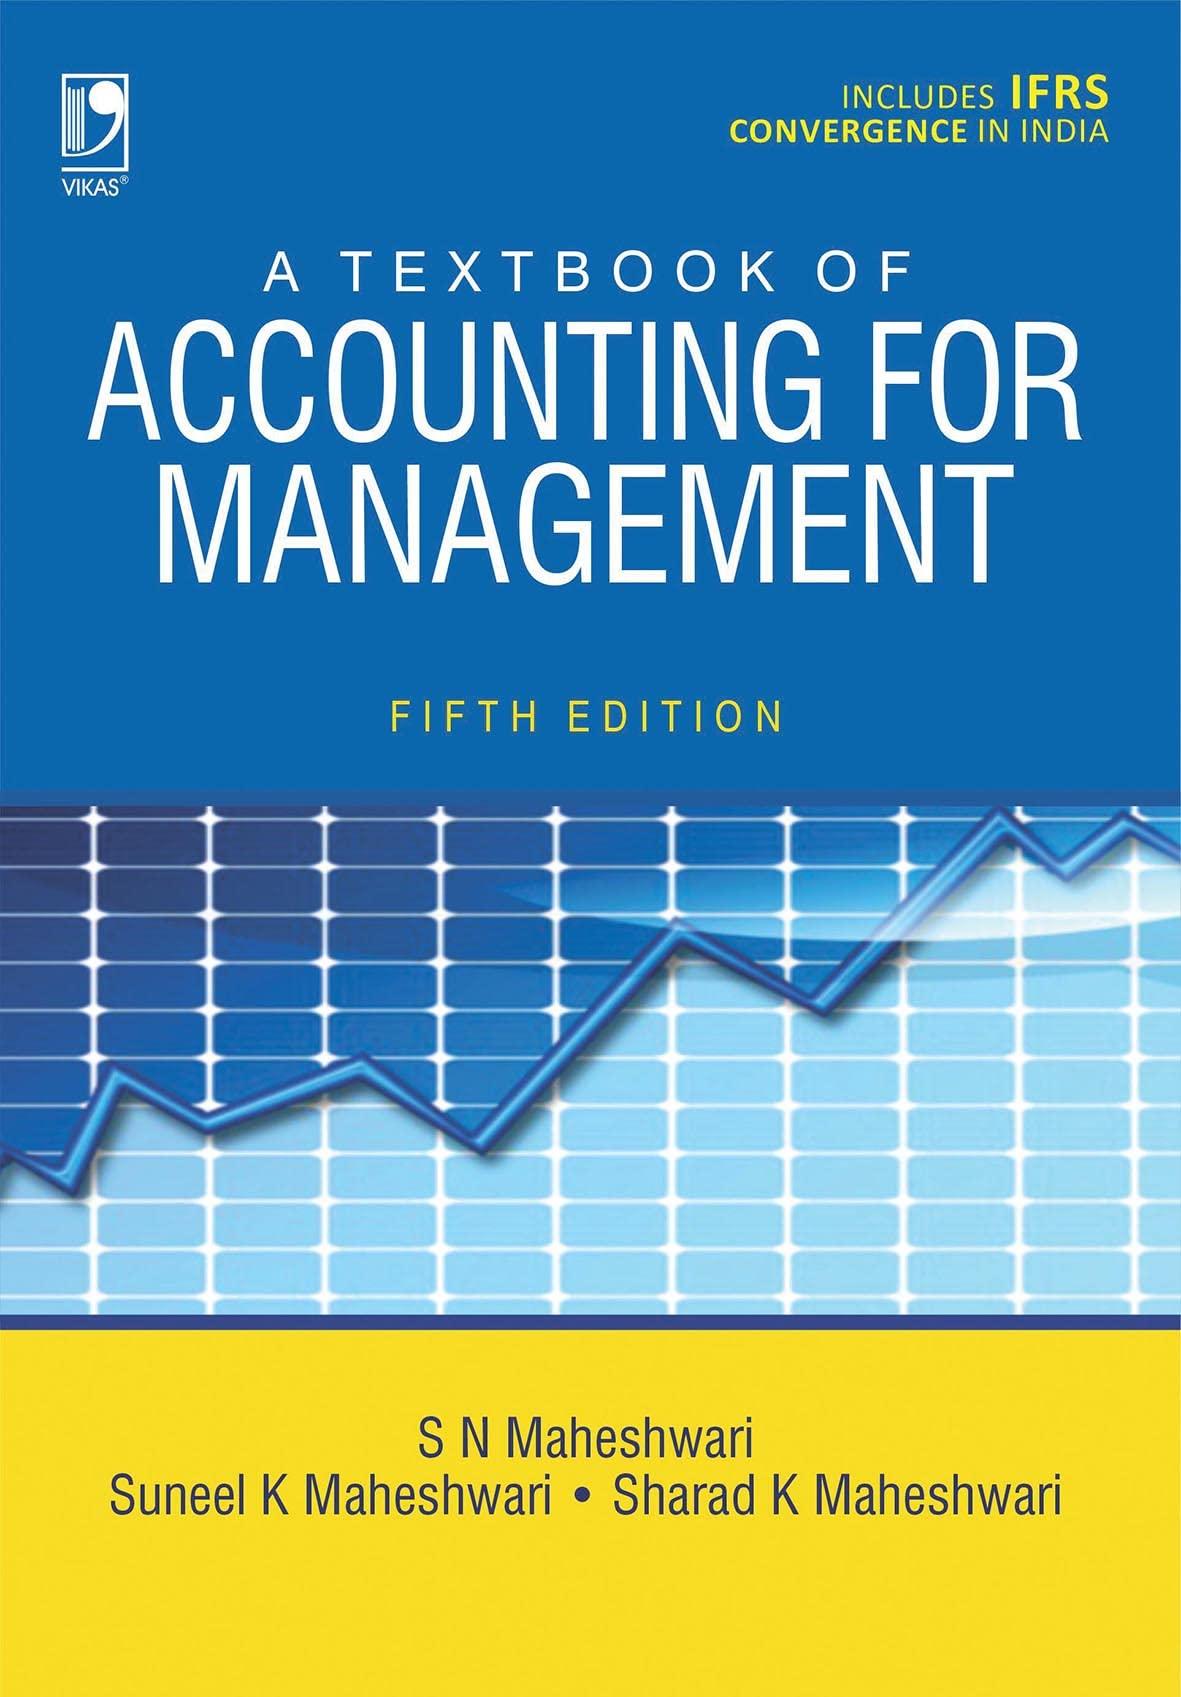 a textbook of accounting for management 5th edition sharad k maheshwari, suneel k maheshwari, s n maheshwari